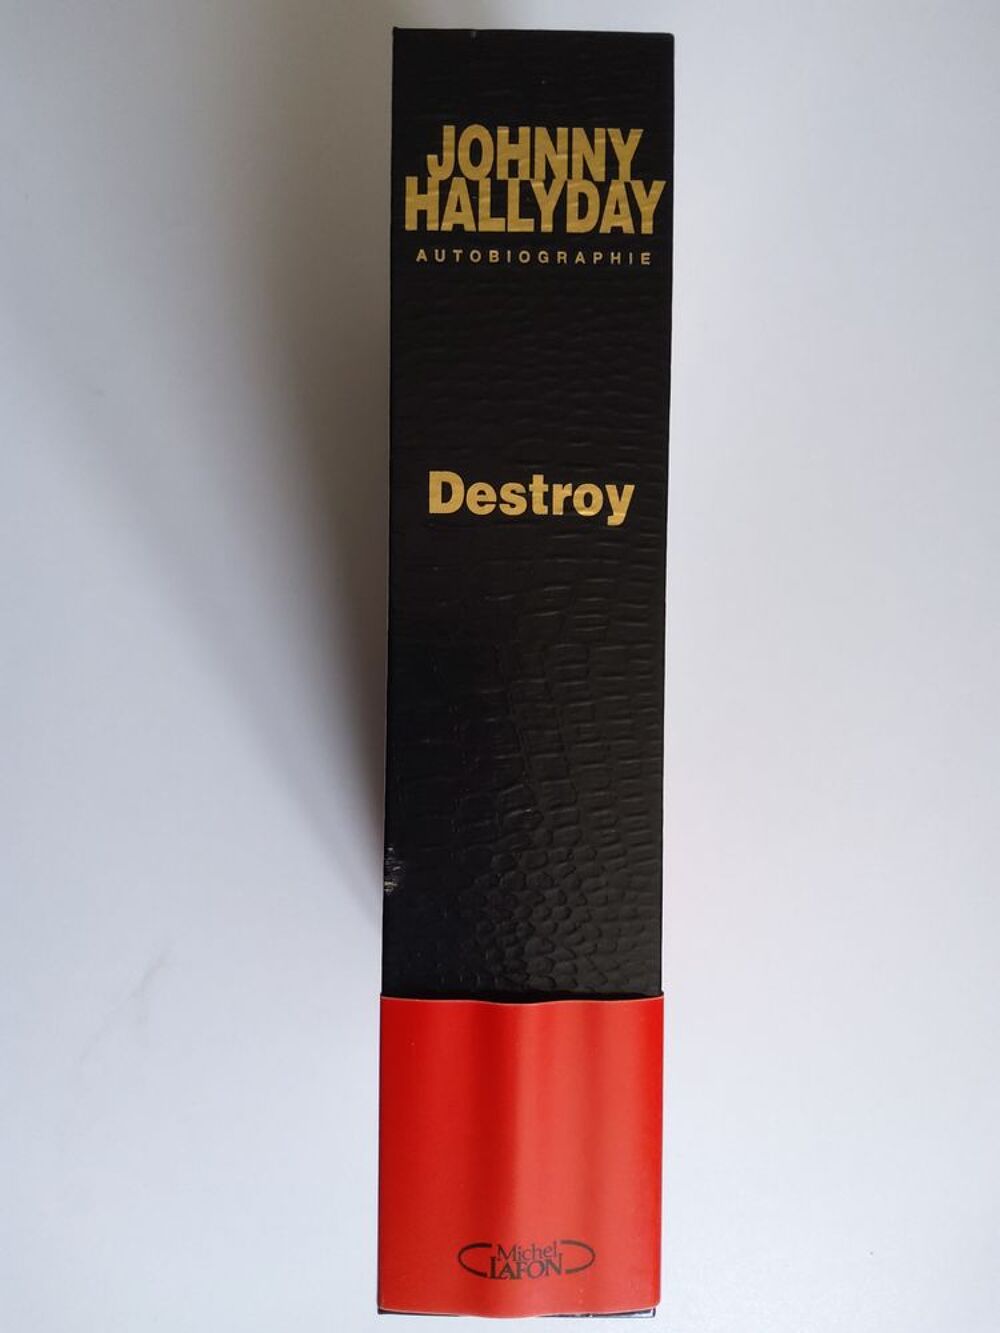 JOHNNY HALLYDAY - DESTROY - Autobiographie Collector Livres et BD